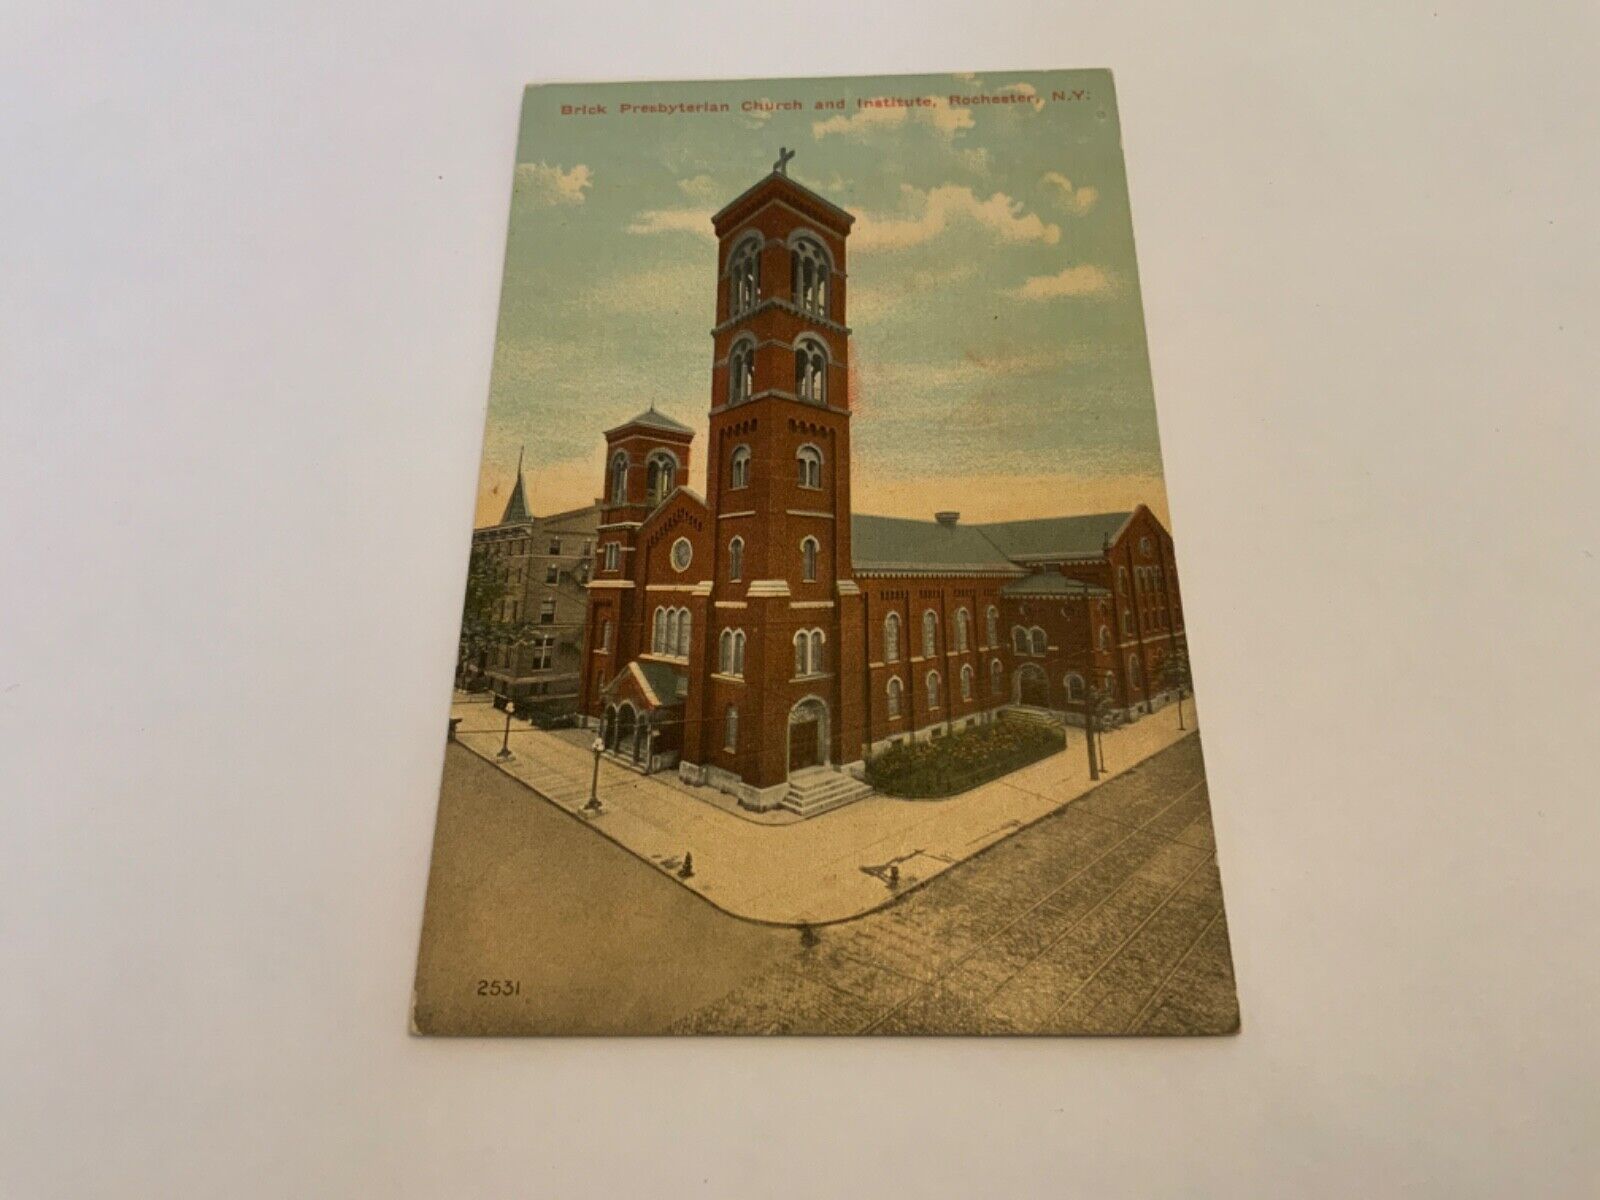 Rochester, N.Y. ~ Brick Presbyterian Church and Institute - Antique Postcard